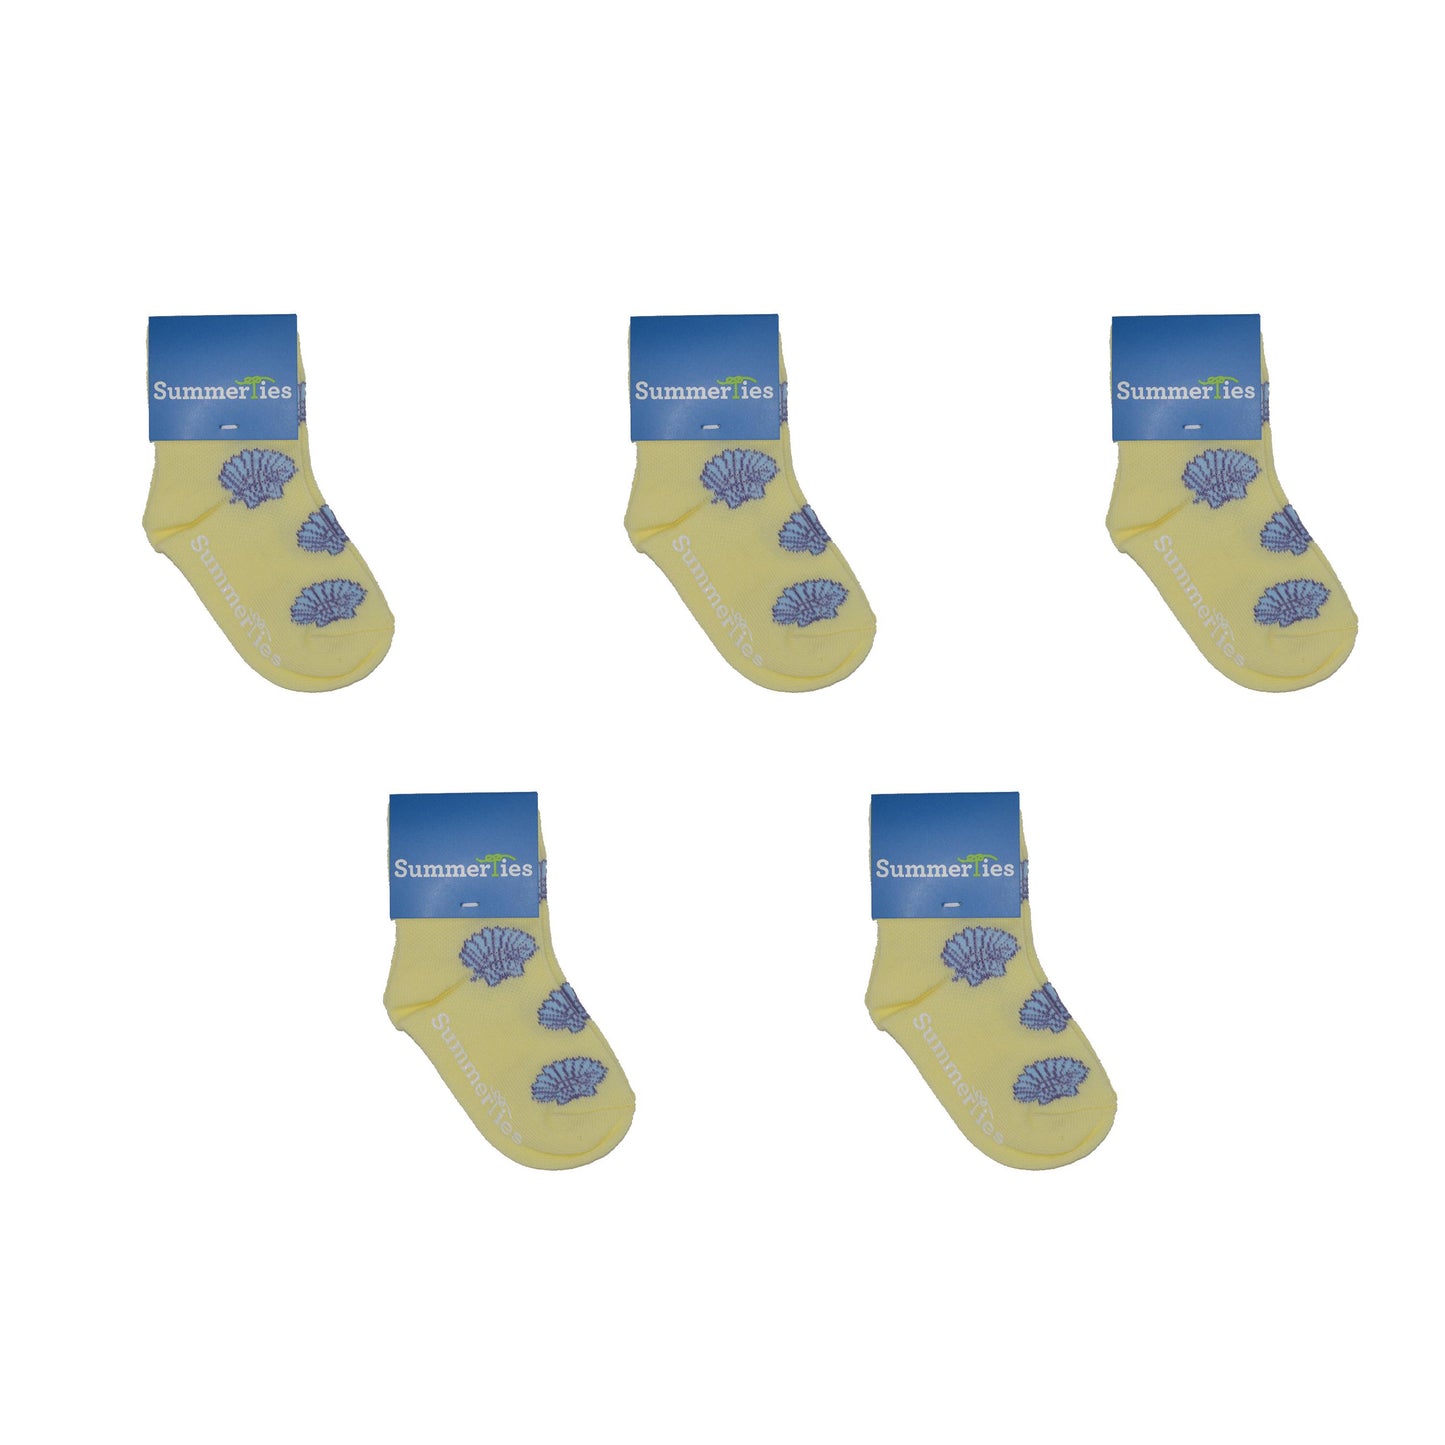 Sea Shell Socks - Toddler Crew Sock - Blue on Yellow - 5 Pairs - SummerTies